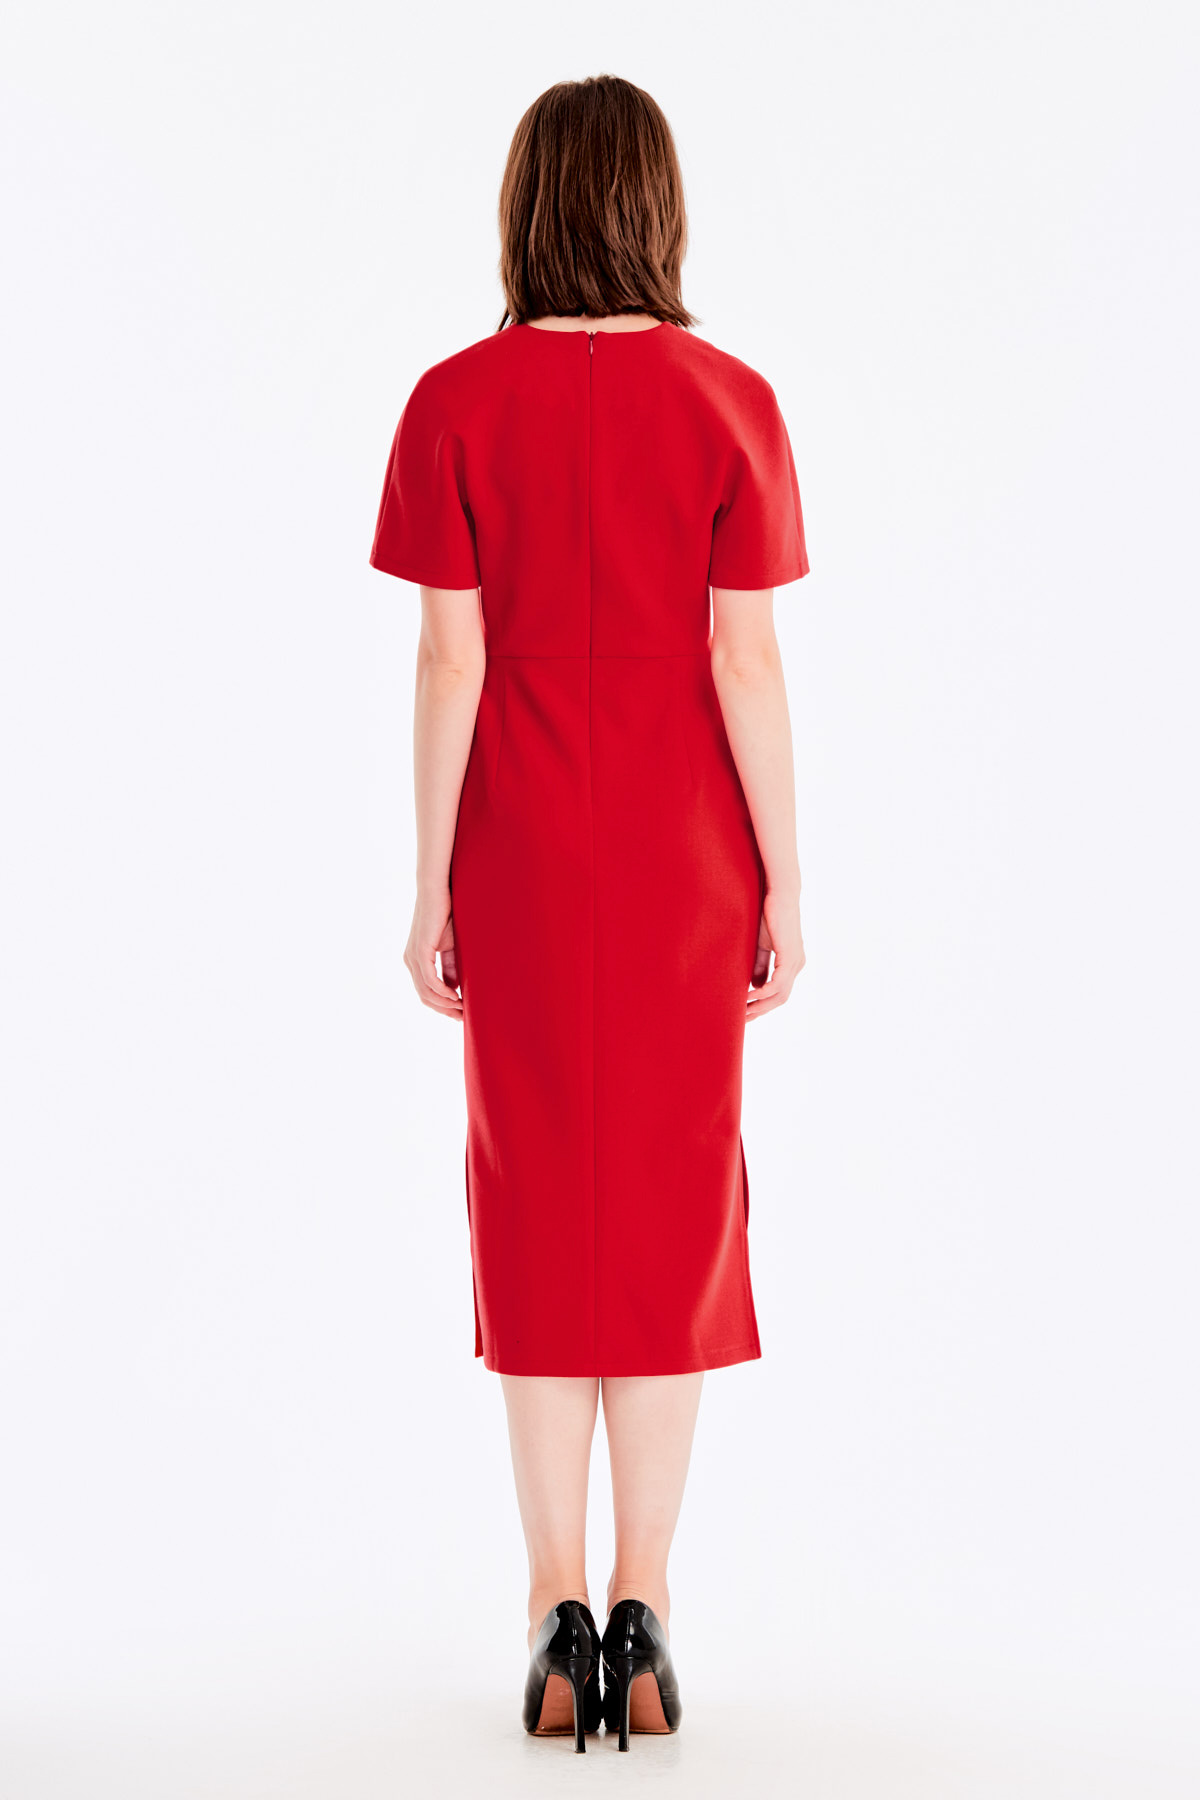 V-neck red dress with slits  , photo 6